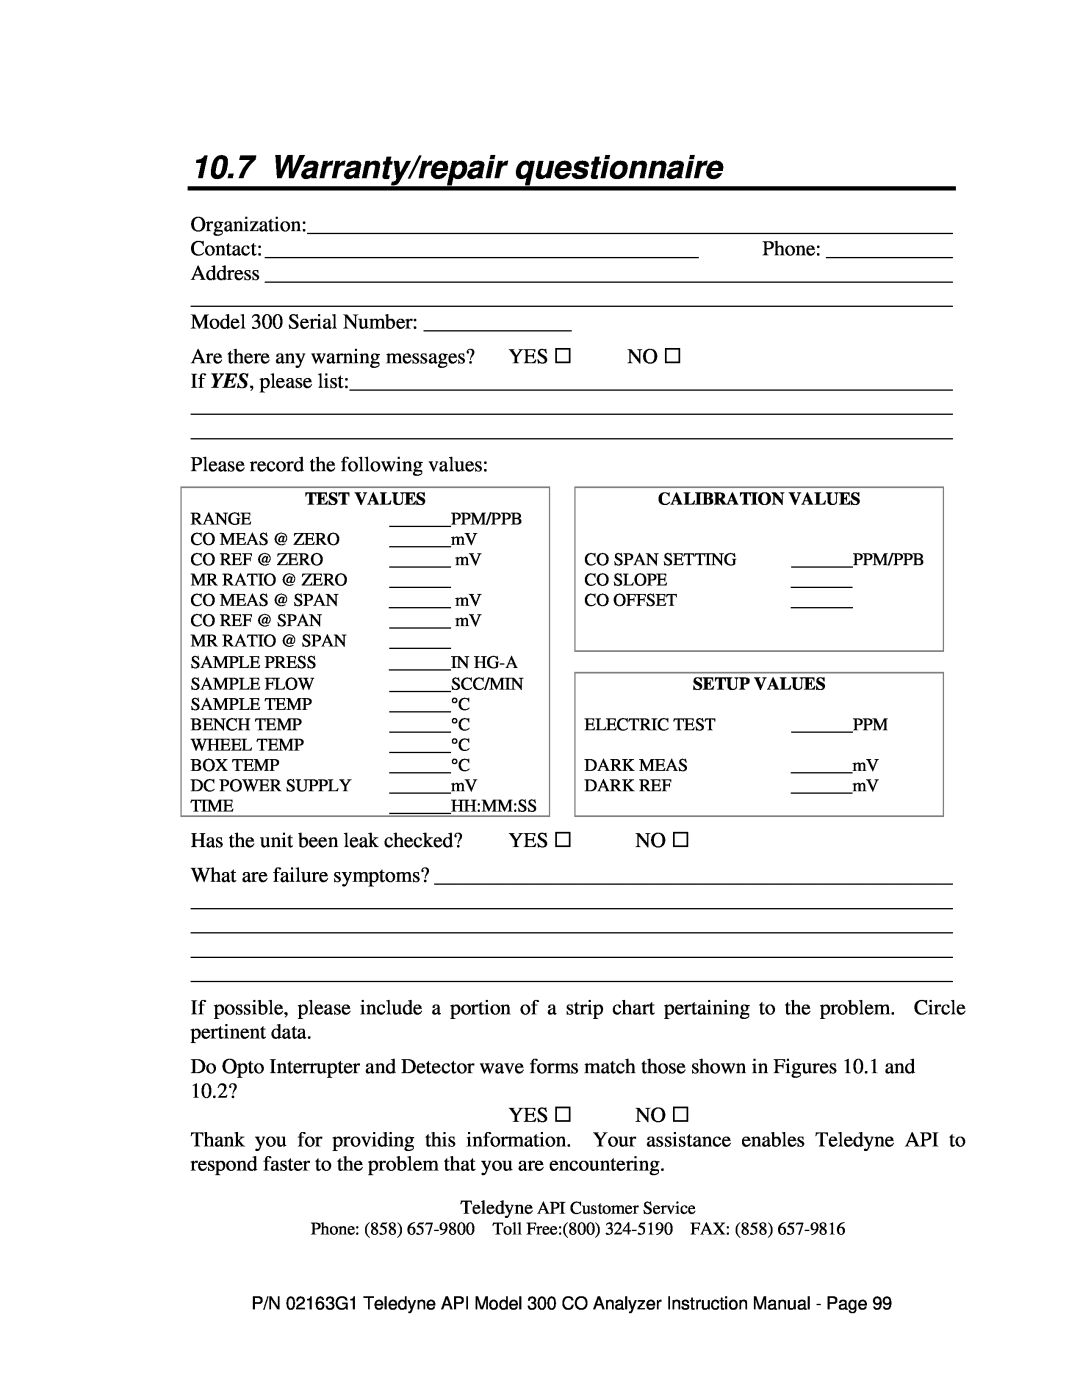 Teledyne 300 instruction manual Warranty/repair questionnaire 